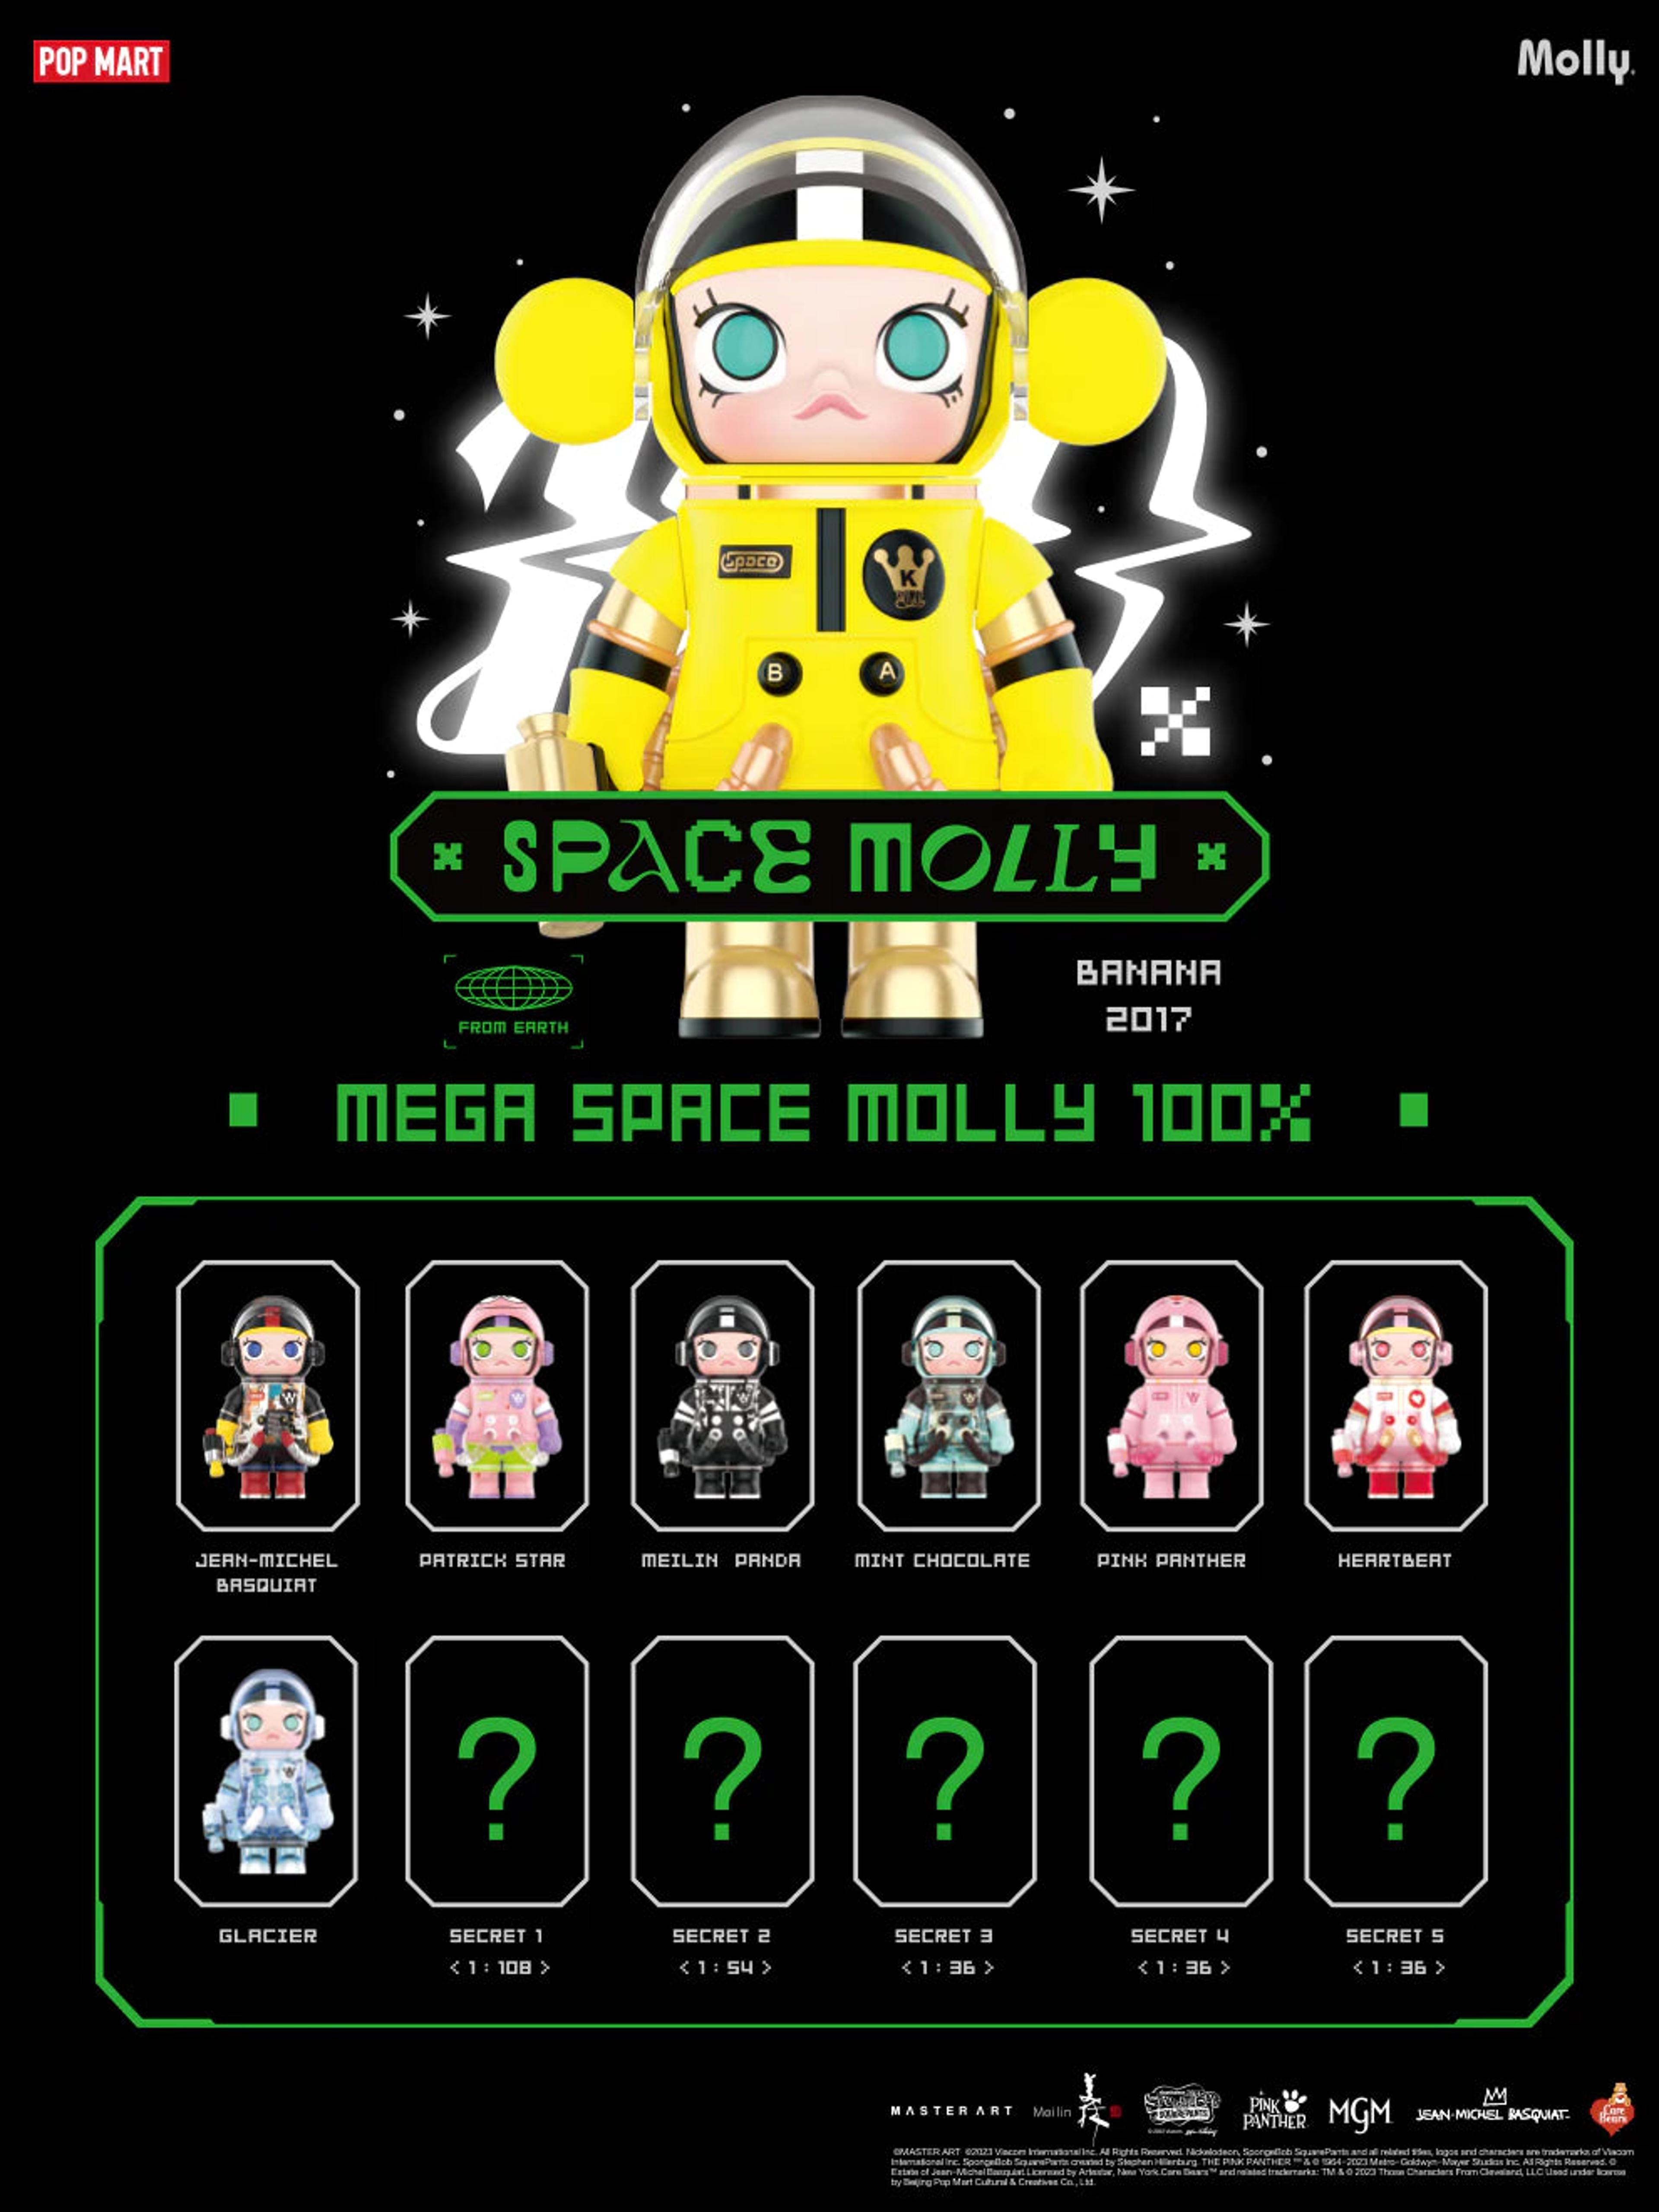 Alternate View 2 of POP MART MEGA Space Molly 100% Series 2-B Blind Box